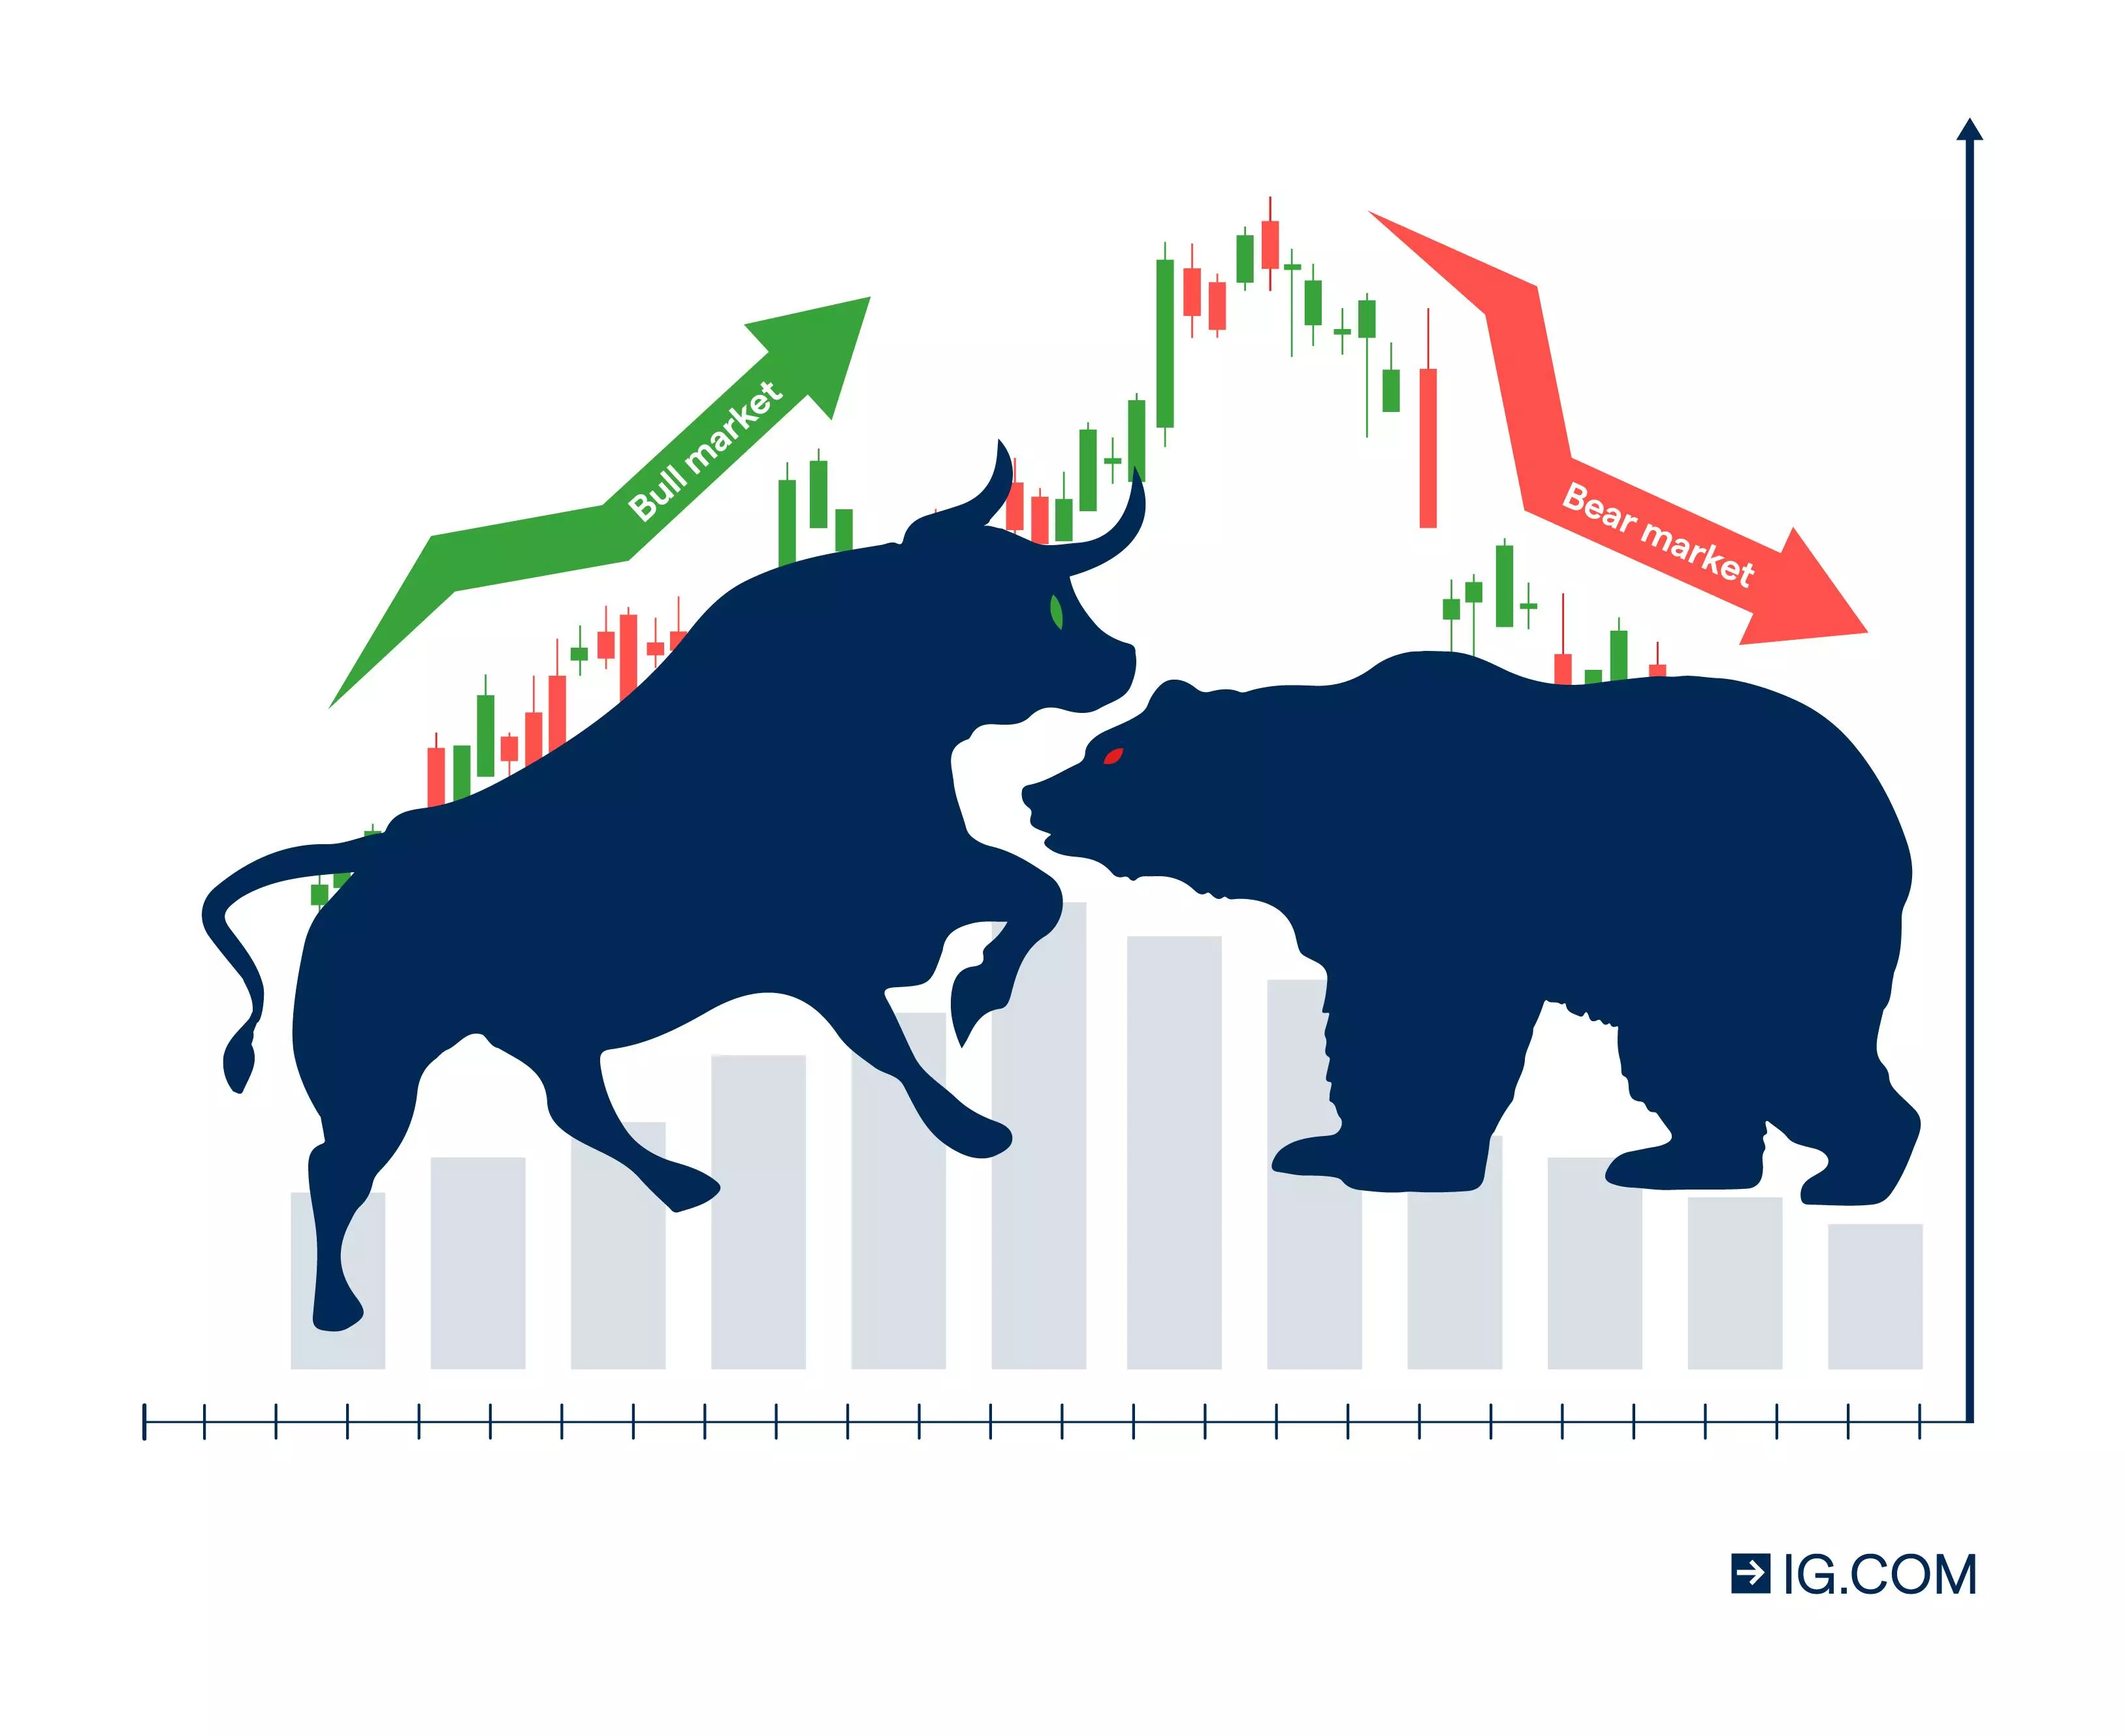 Bull/bear market